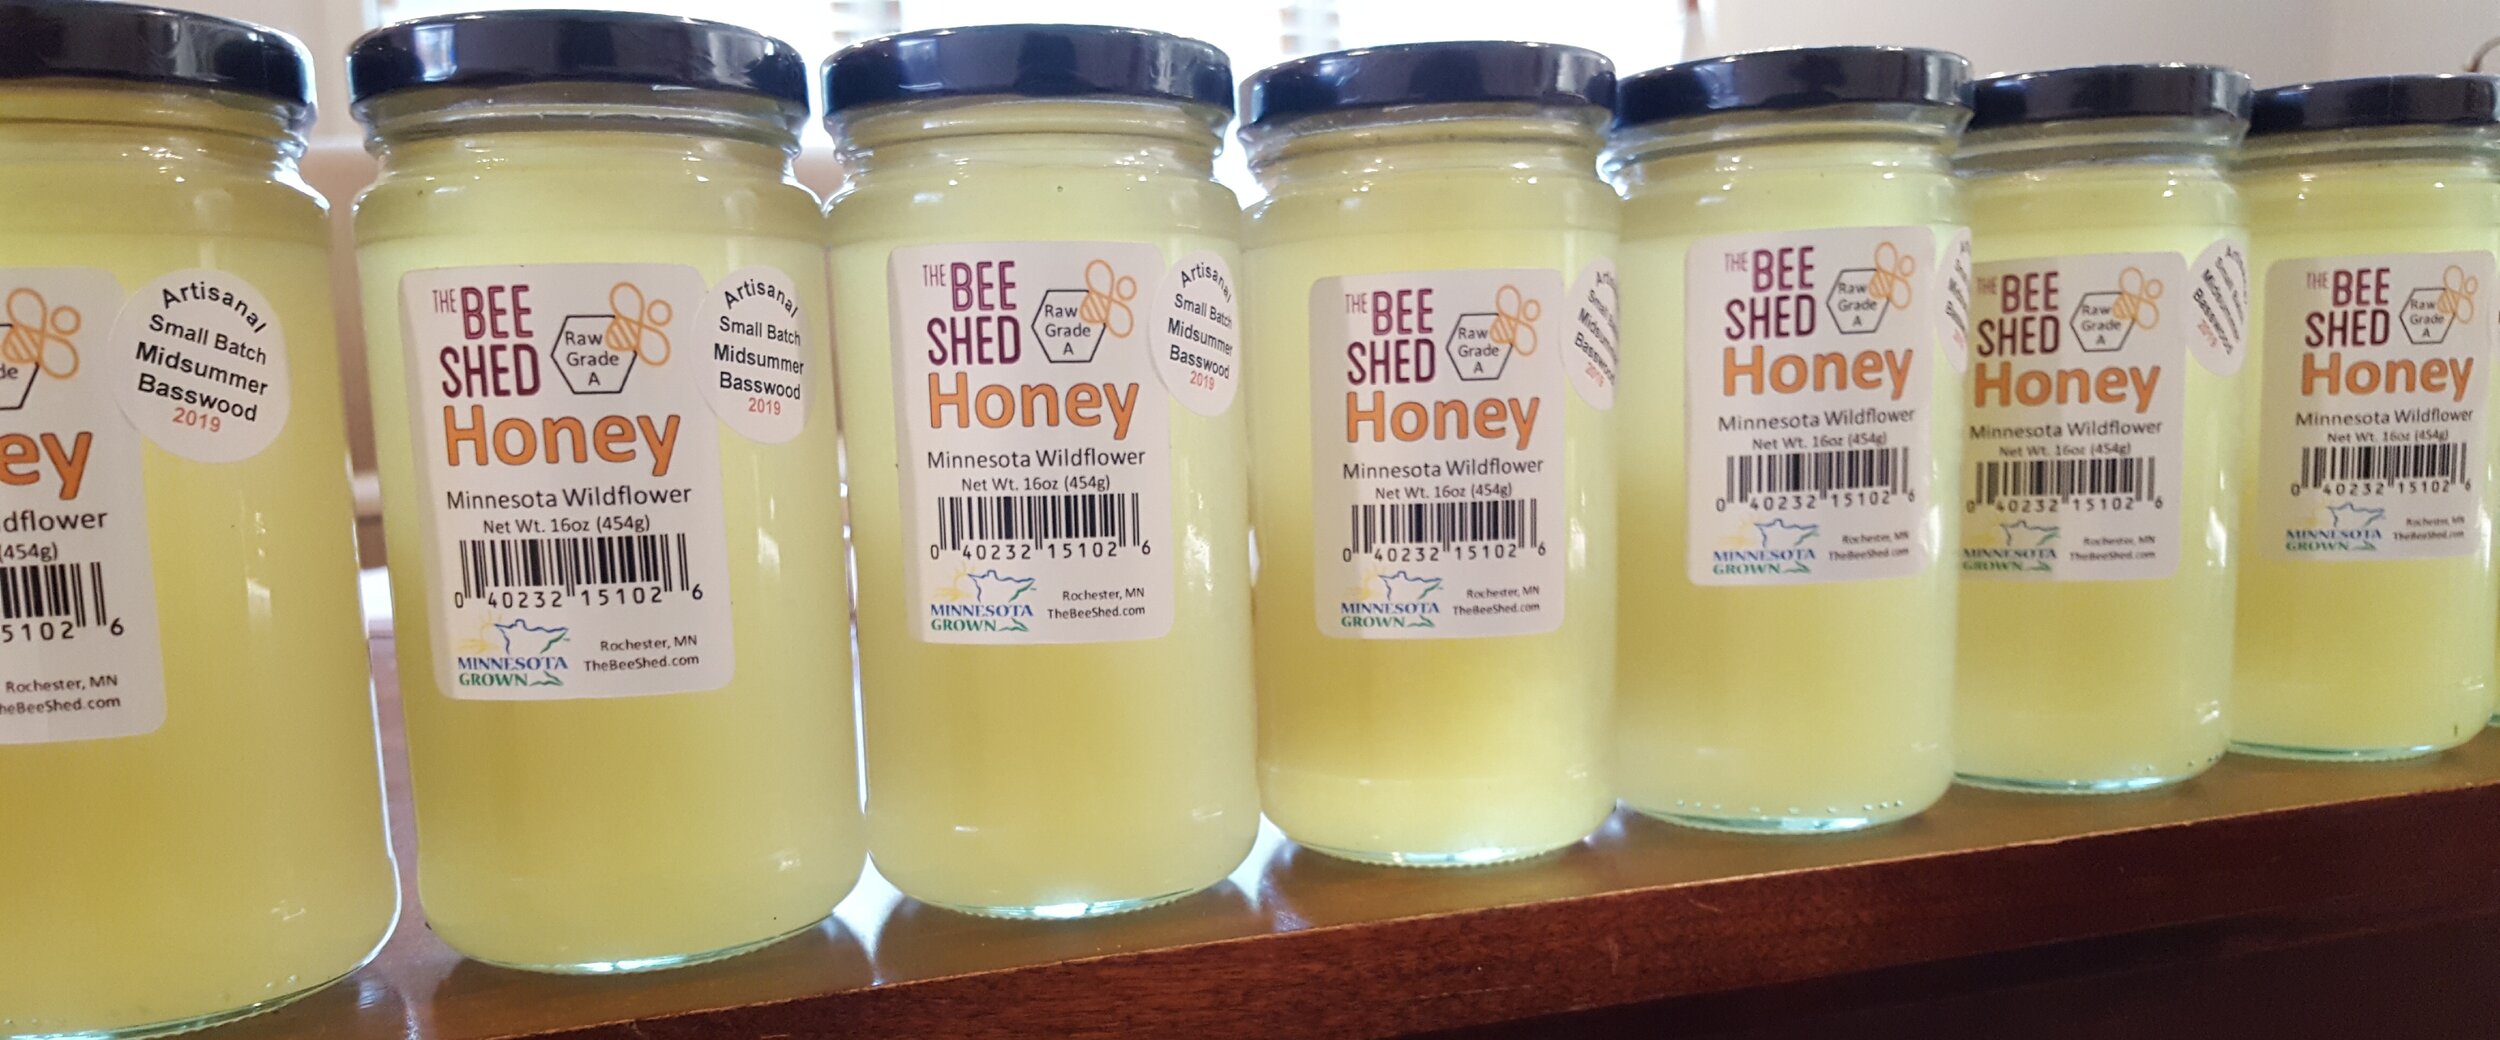 Jars of The Bee Shed's honey on a shelf